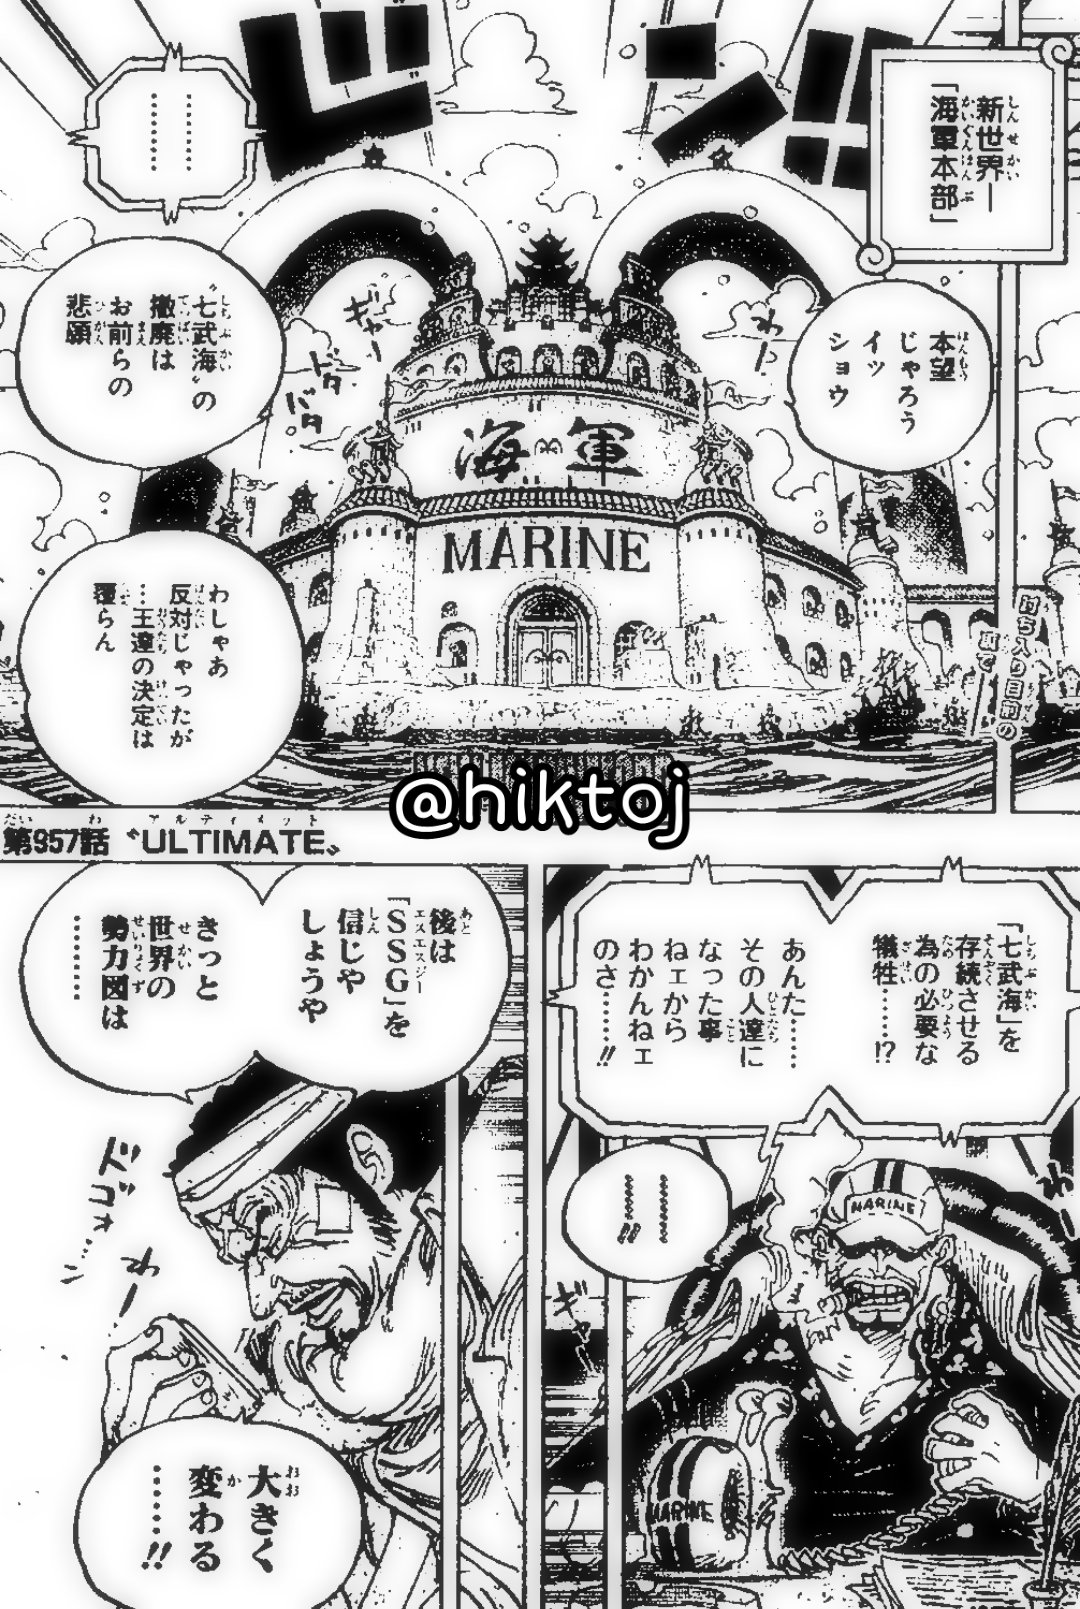 Spoilers 957 Ultimate Foro De One Piece Pirateking